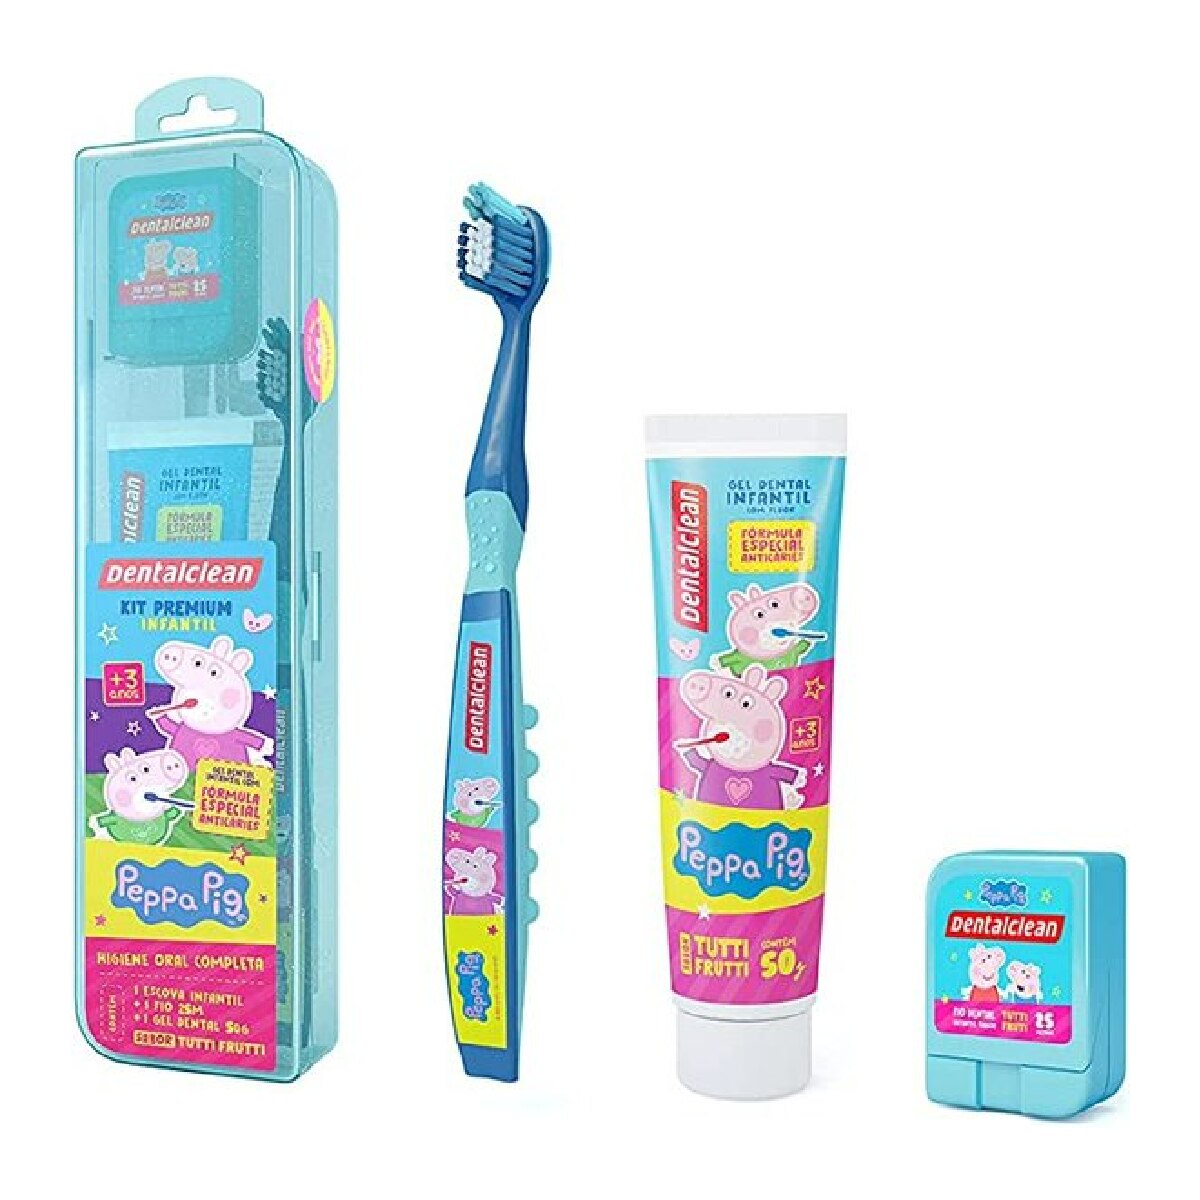 Kit Premium Dentalclean Infantil Peppa Pig +3